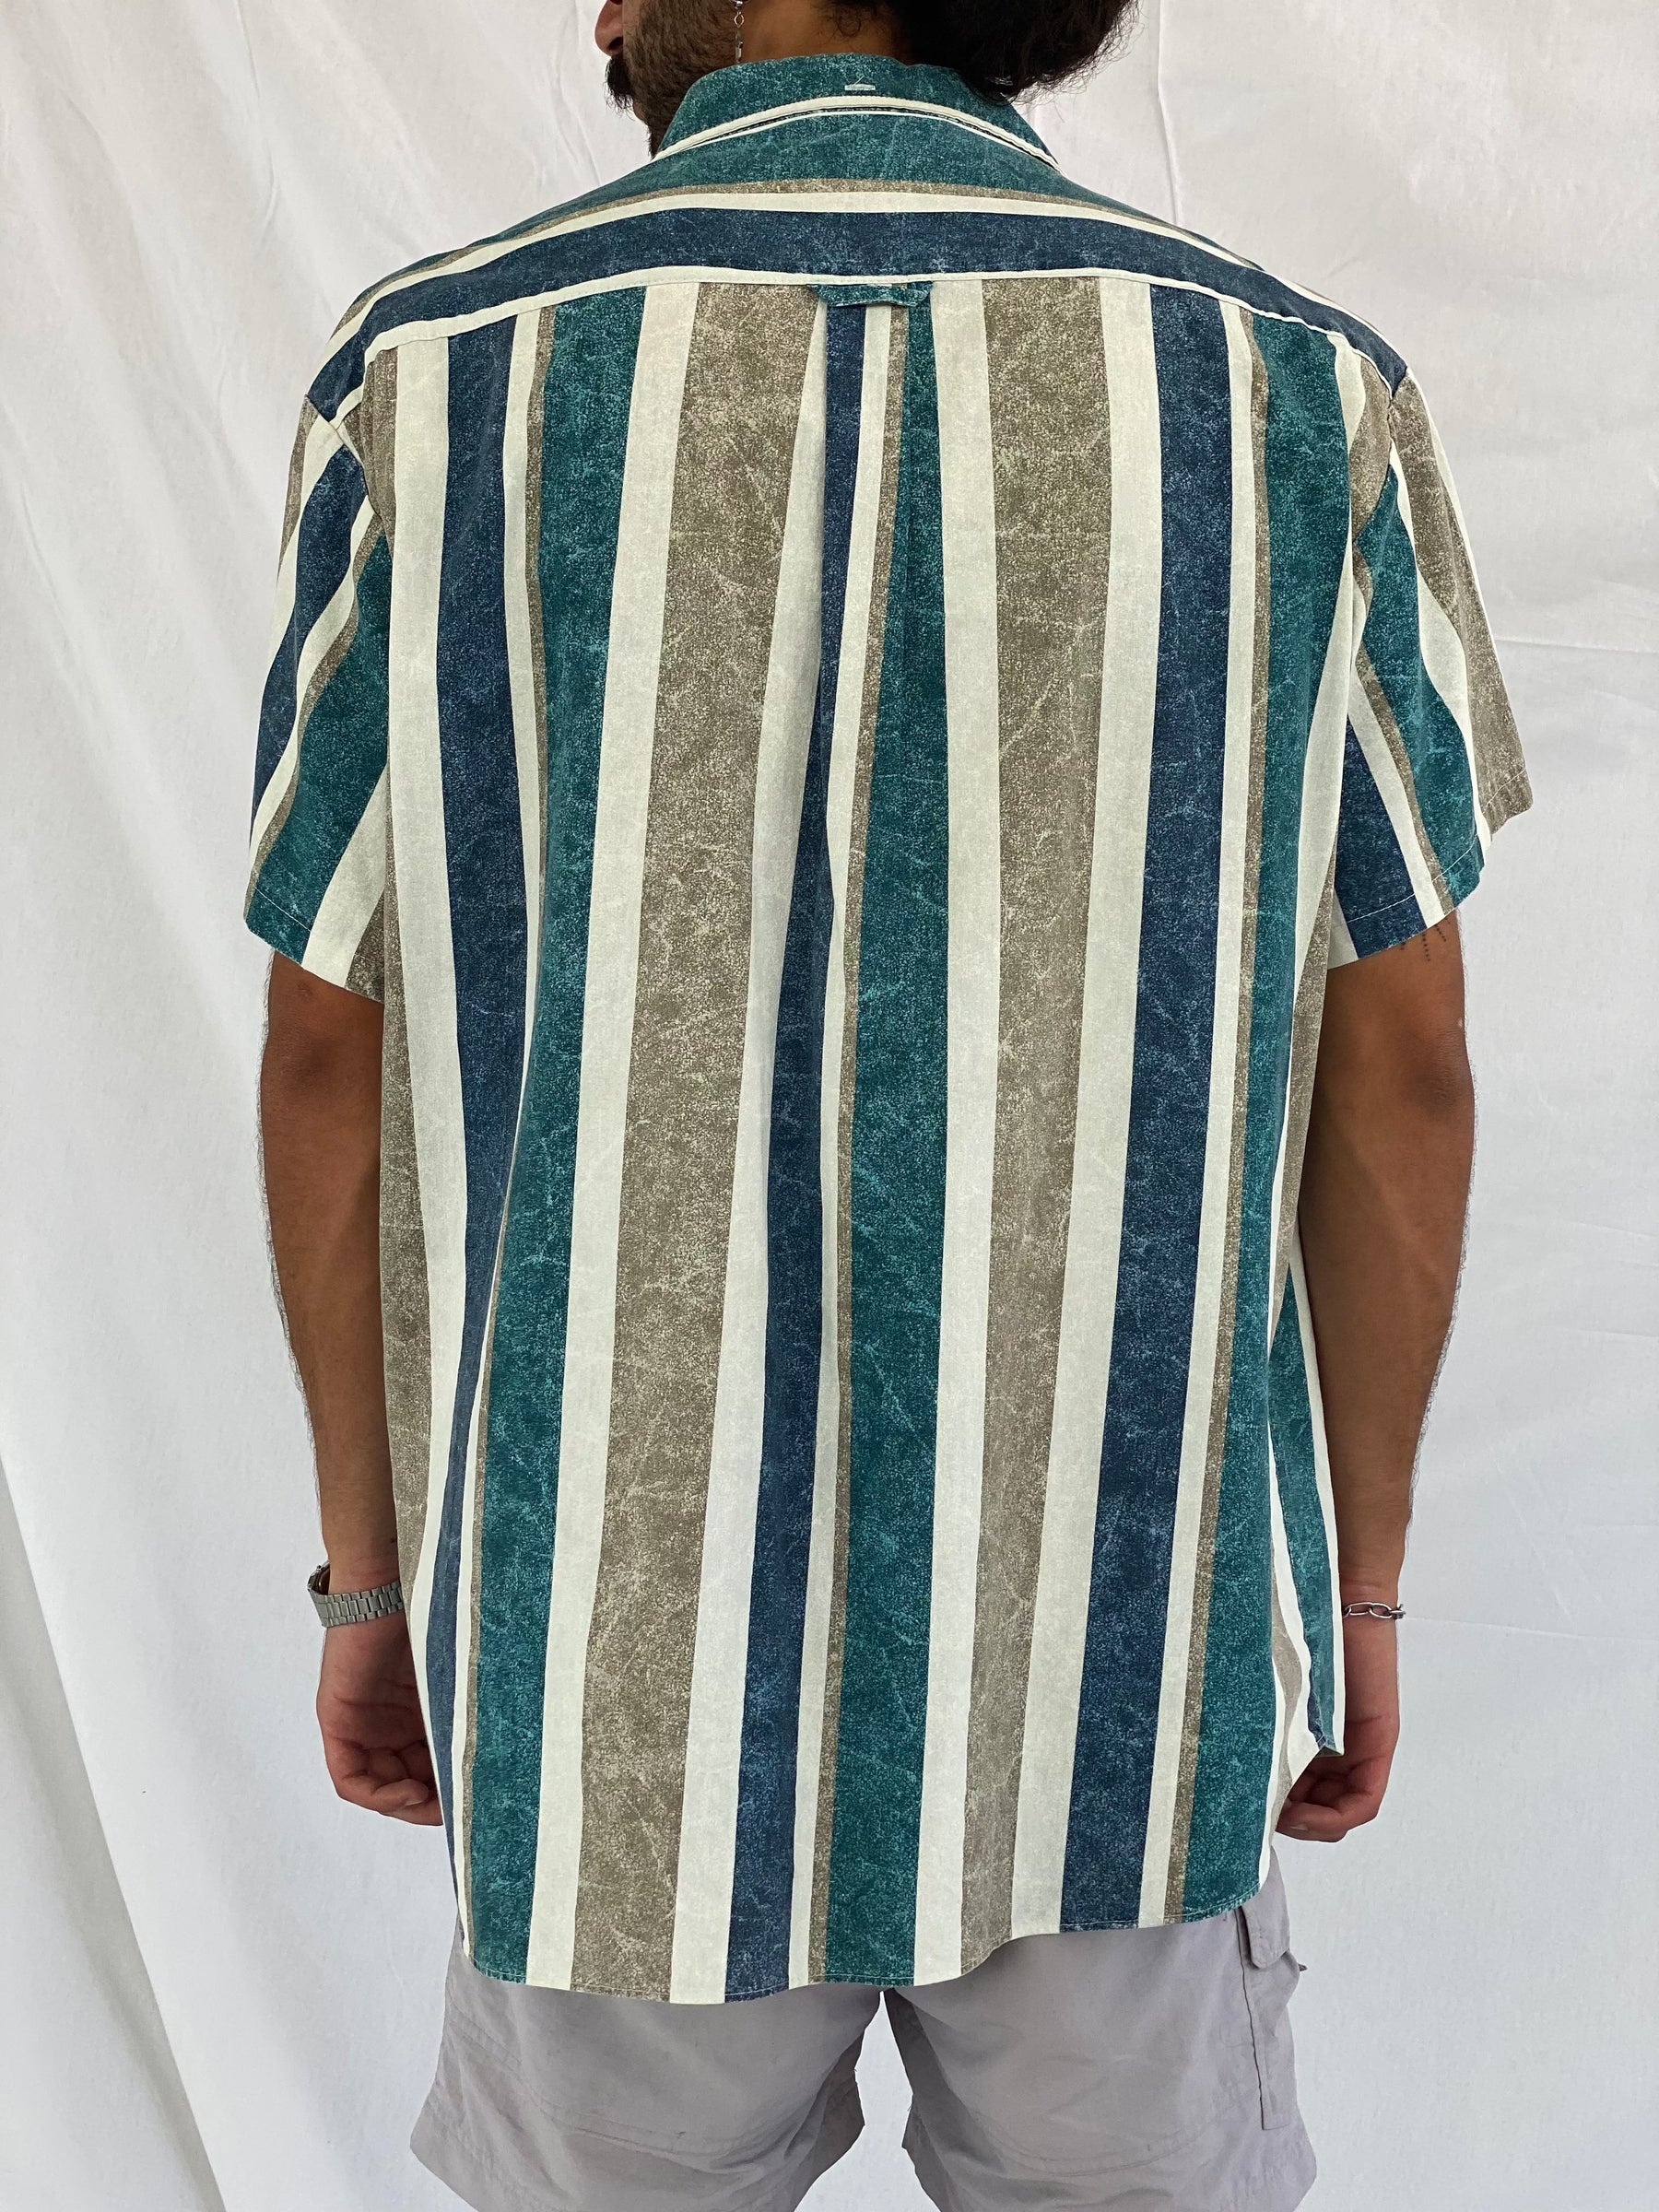 Vintage MAUI Trading Company Shirt - Balagan Vintage